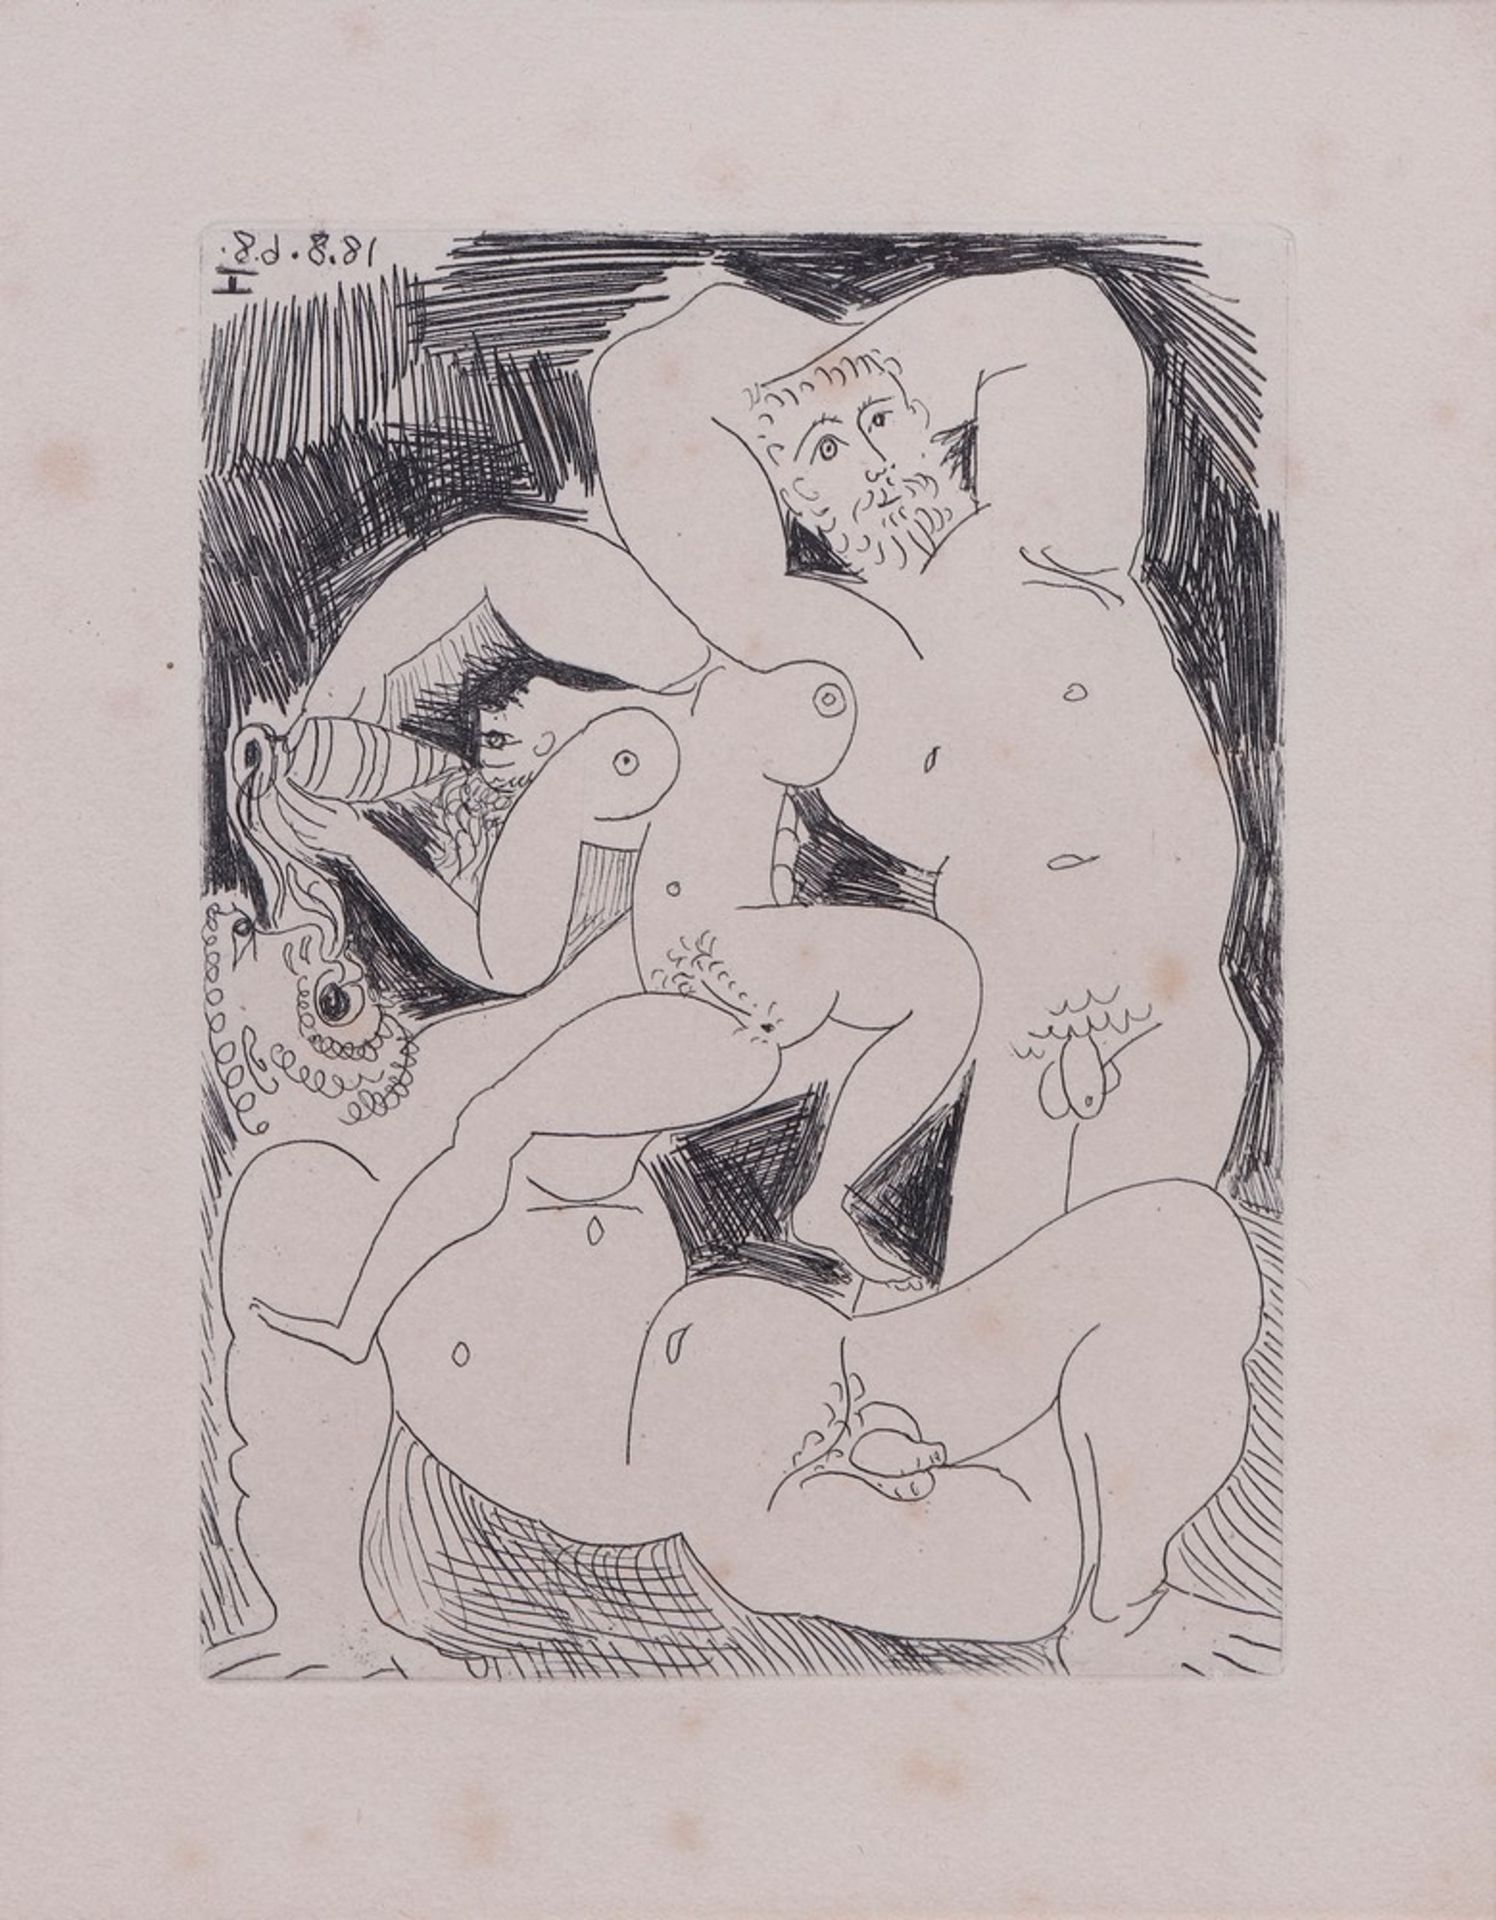 Pablo Ruiz Picasso (1881, Malaga, Spain - 1973, Mougins, France) - Image 2 of 6